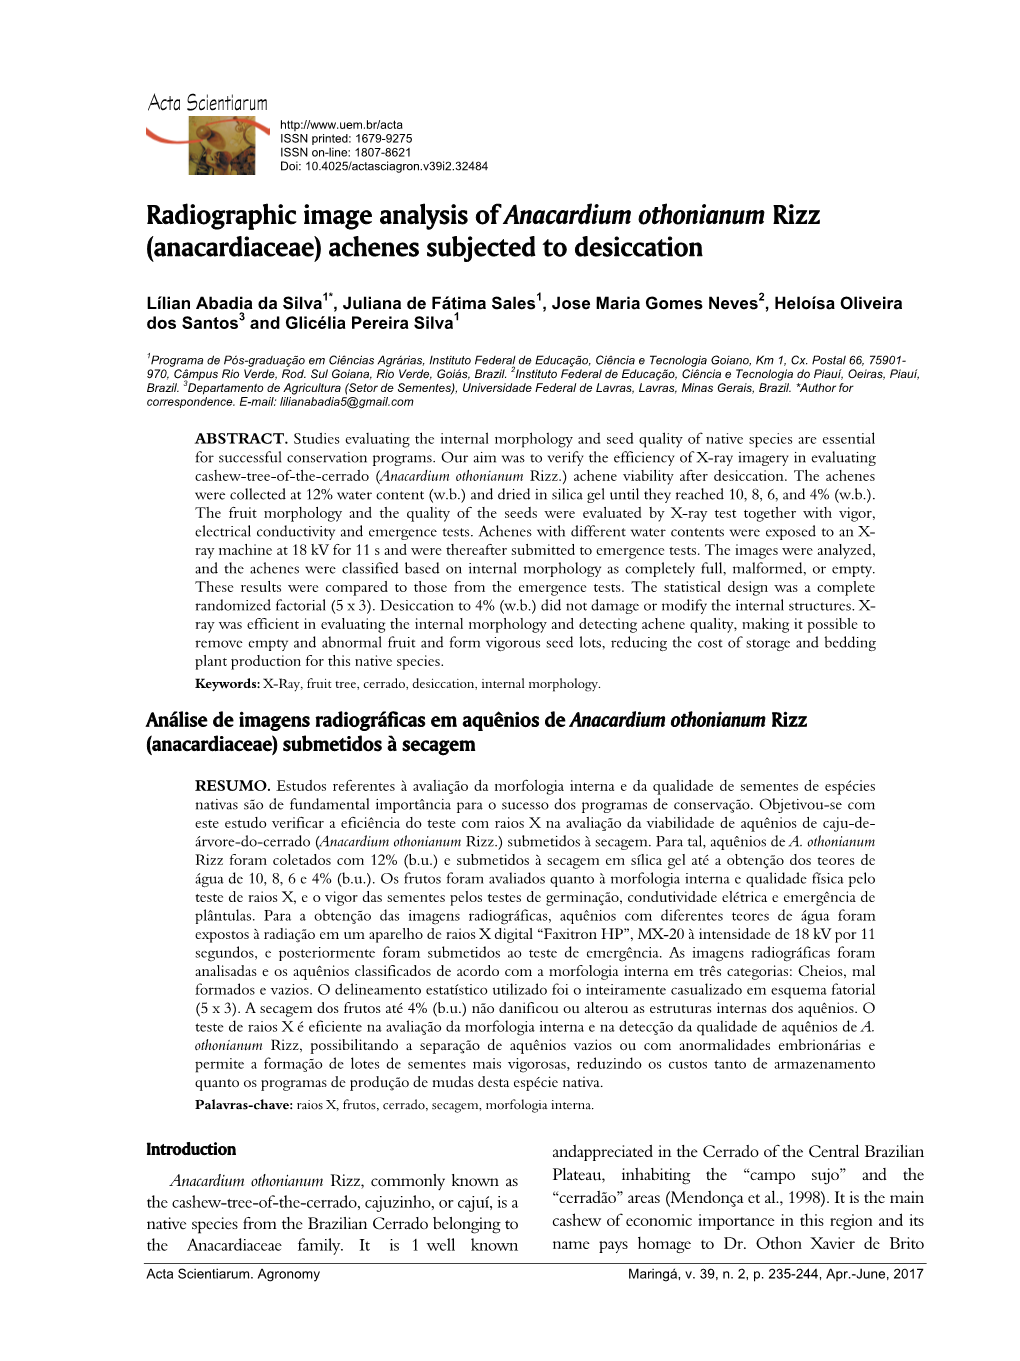 Radiographic Image Analysis of Anacardium Othonianum Rizz (Anacardiaceae) Achenes Subjected to Desiccation